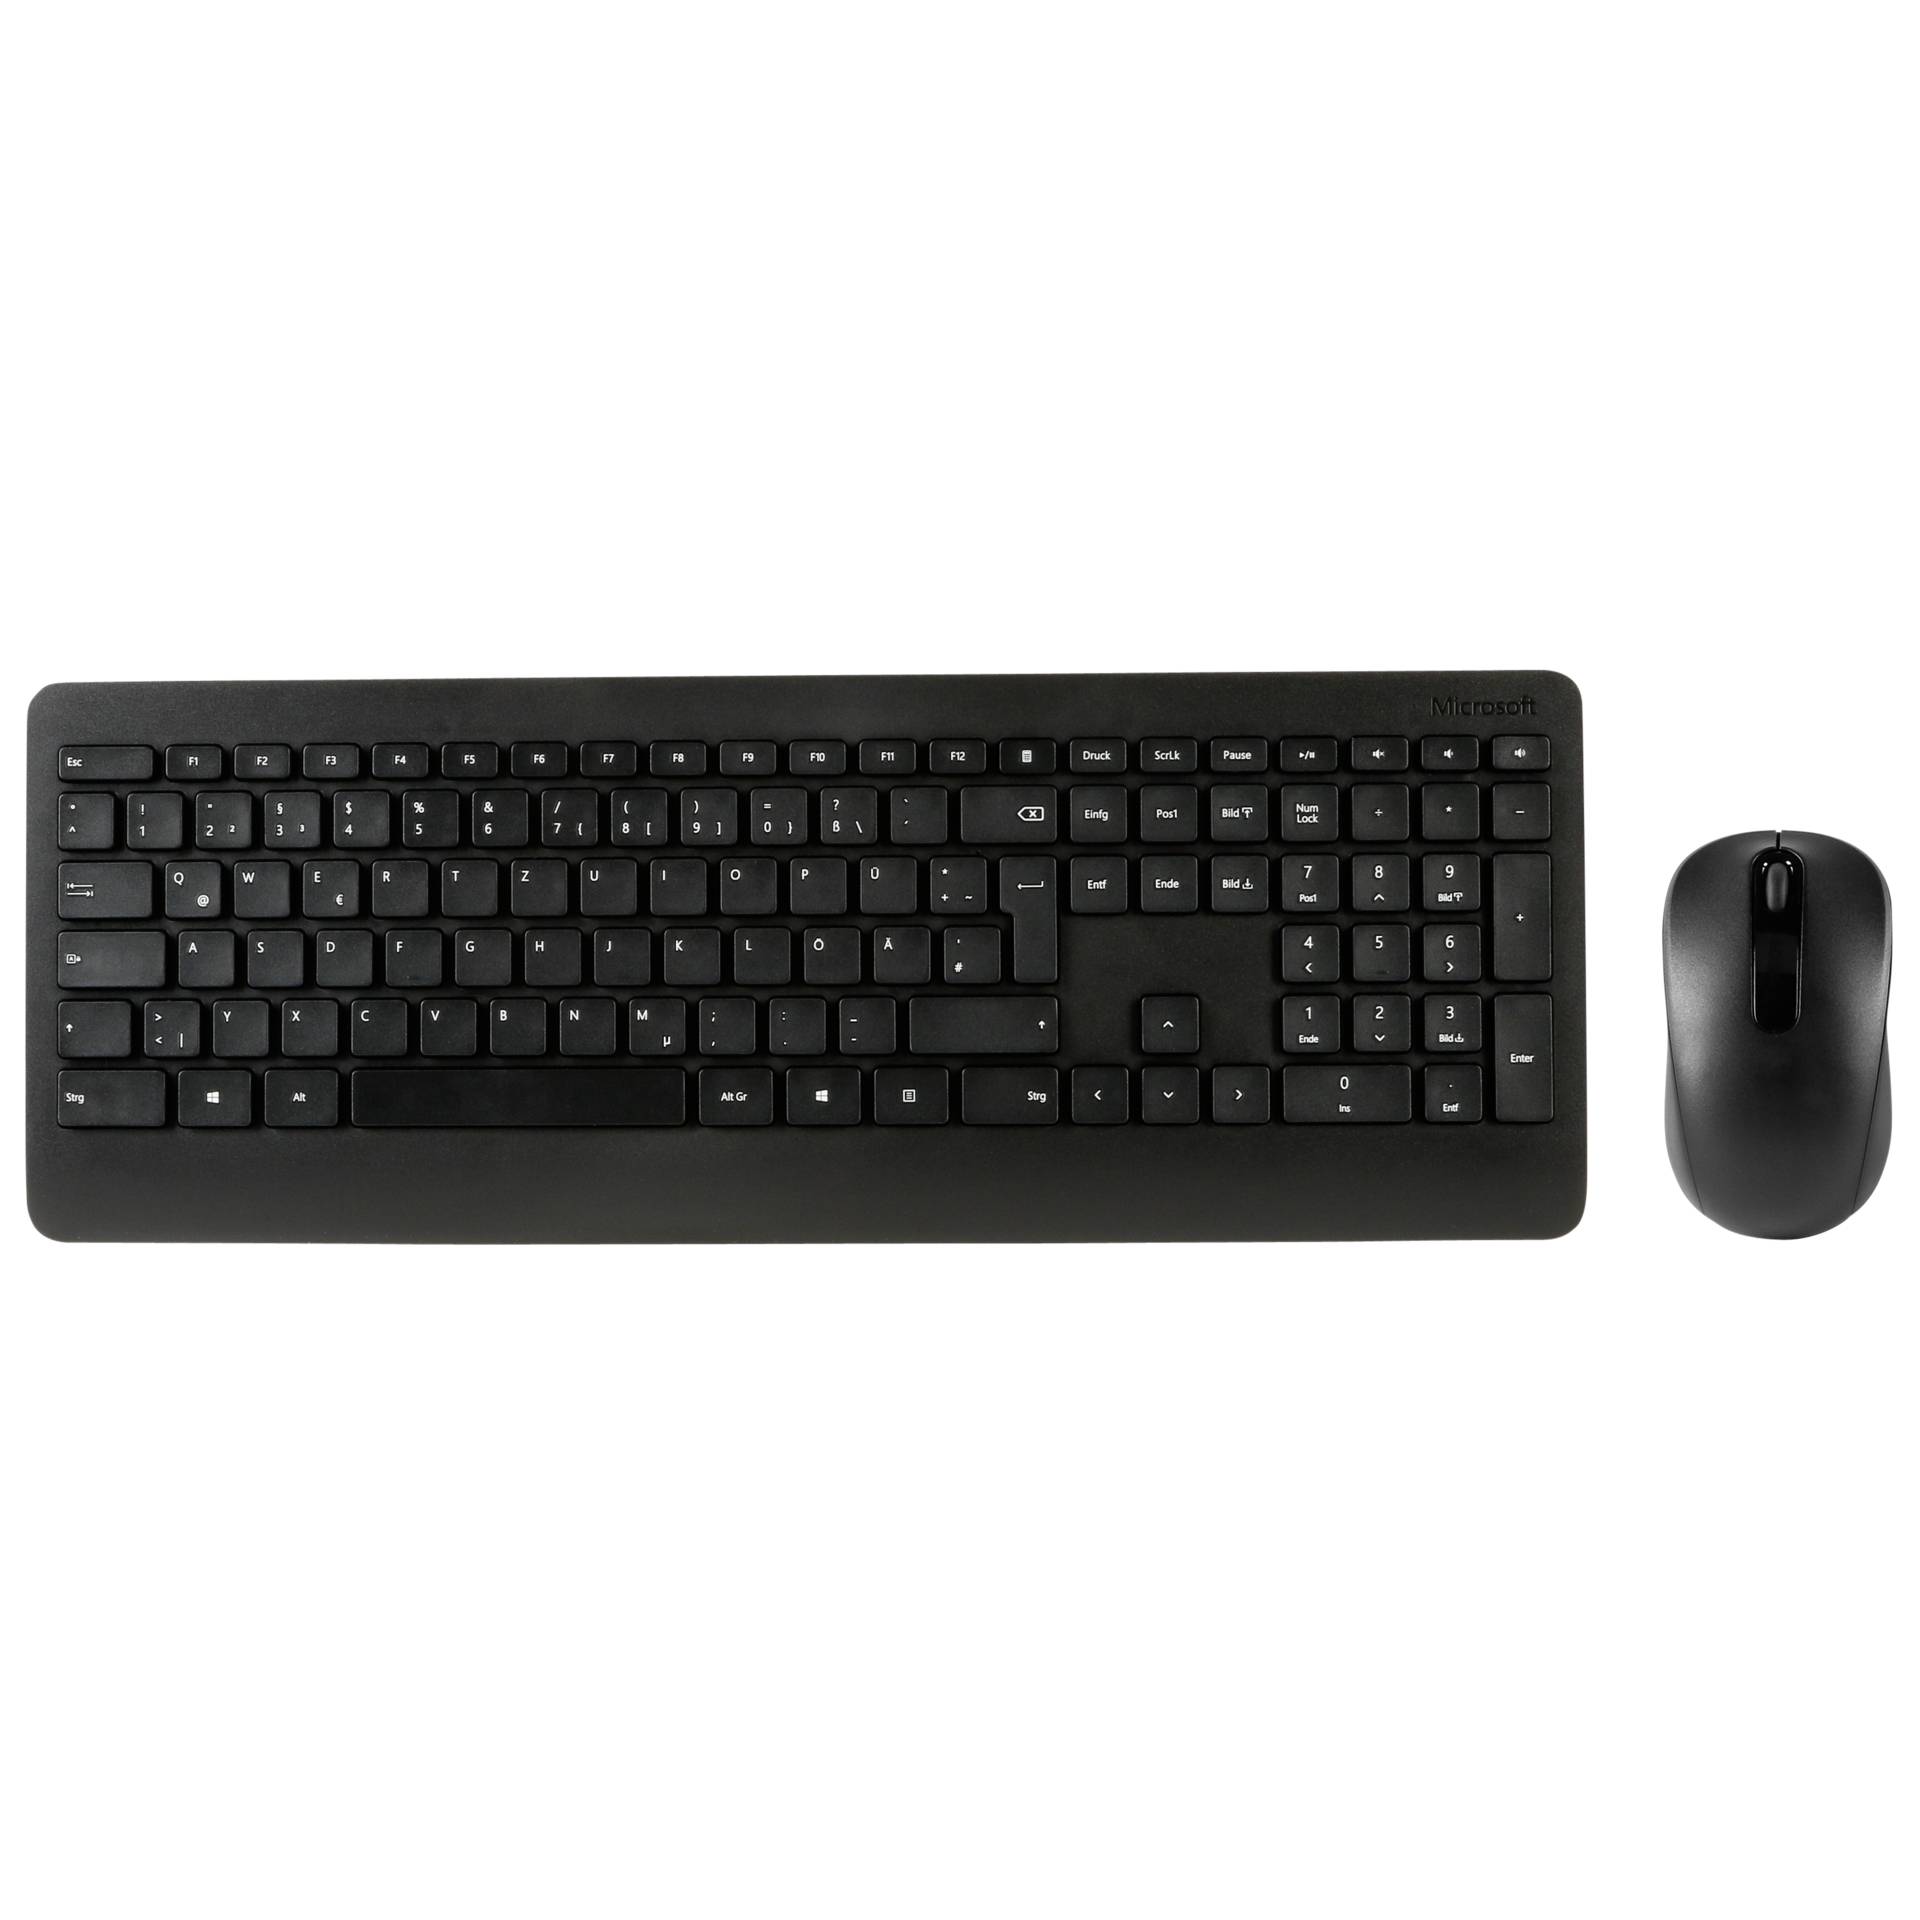 Microsoft Wireless Desktop 900 Tastatur-Maus-Kombination 